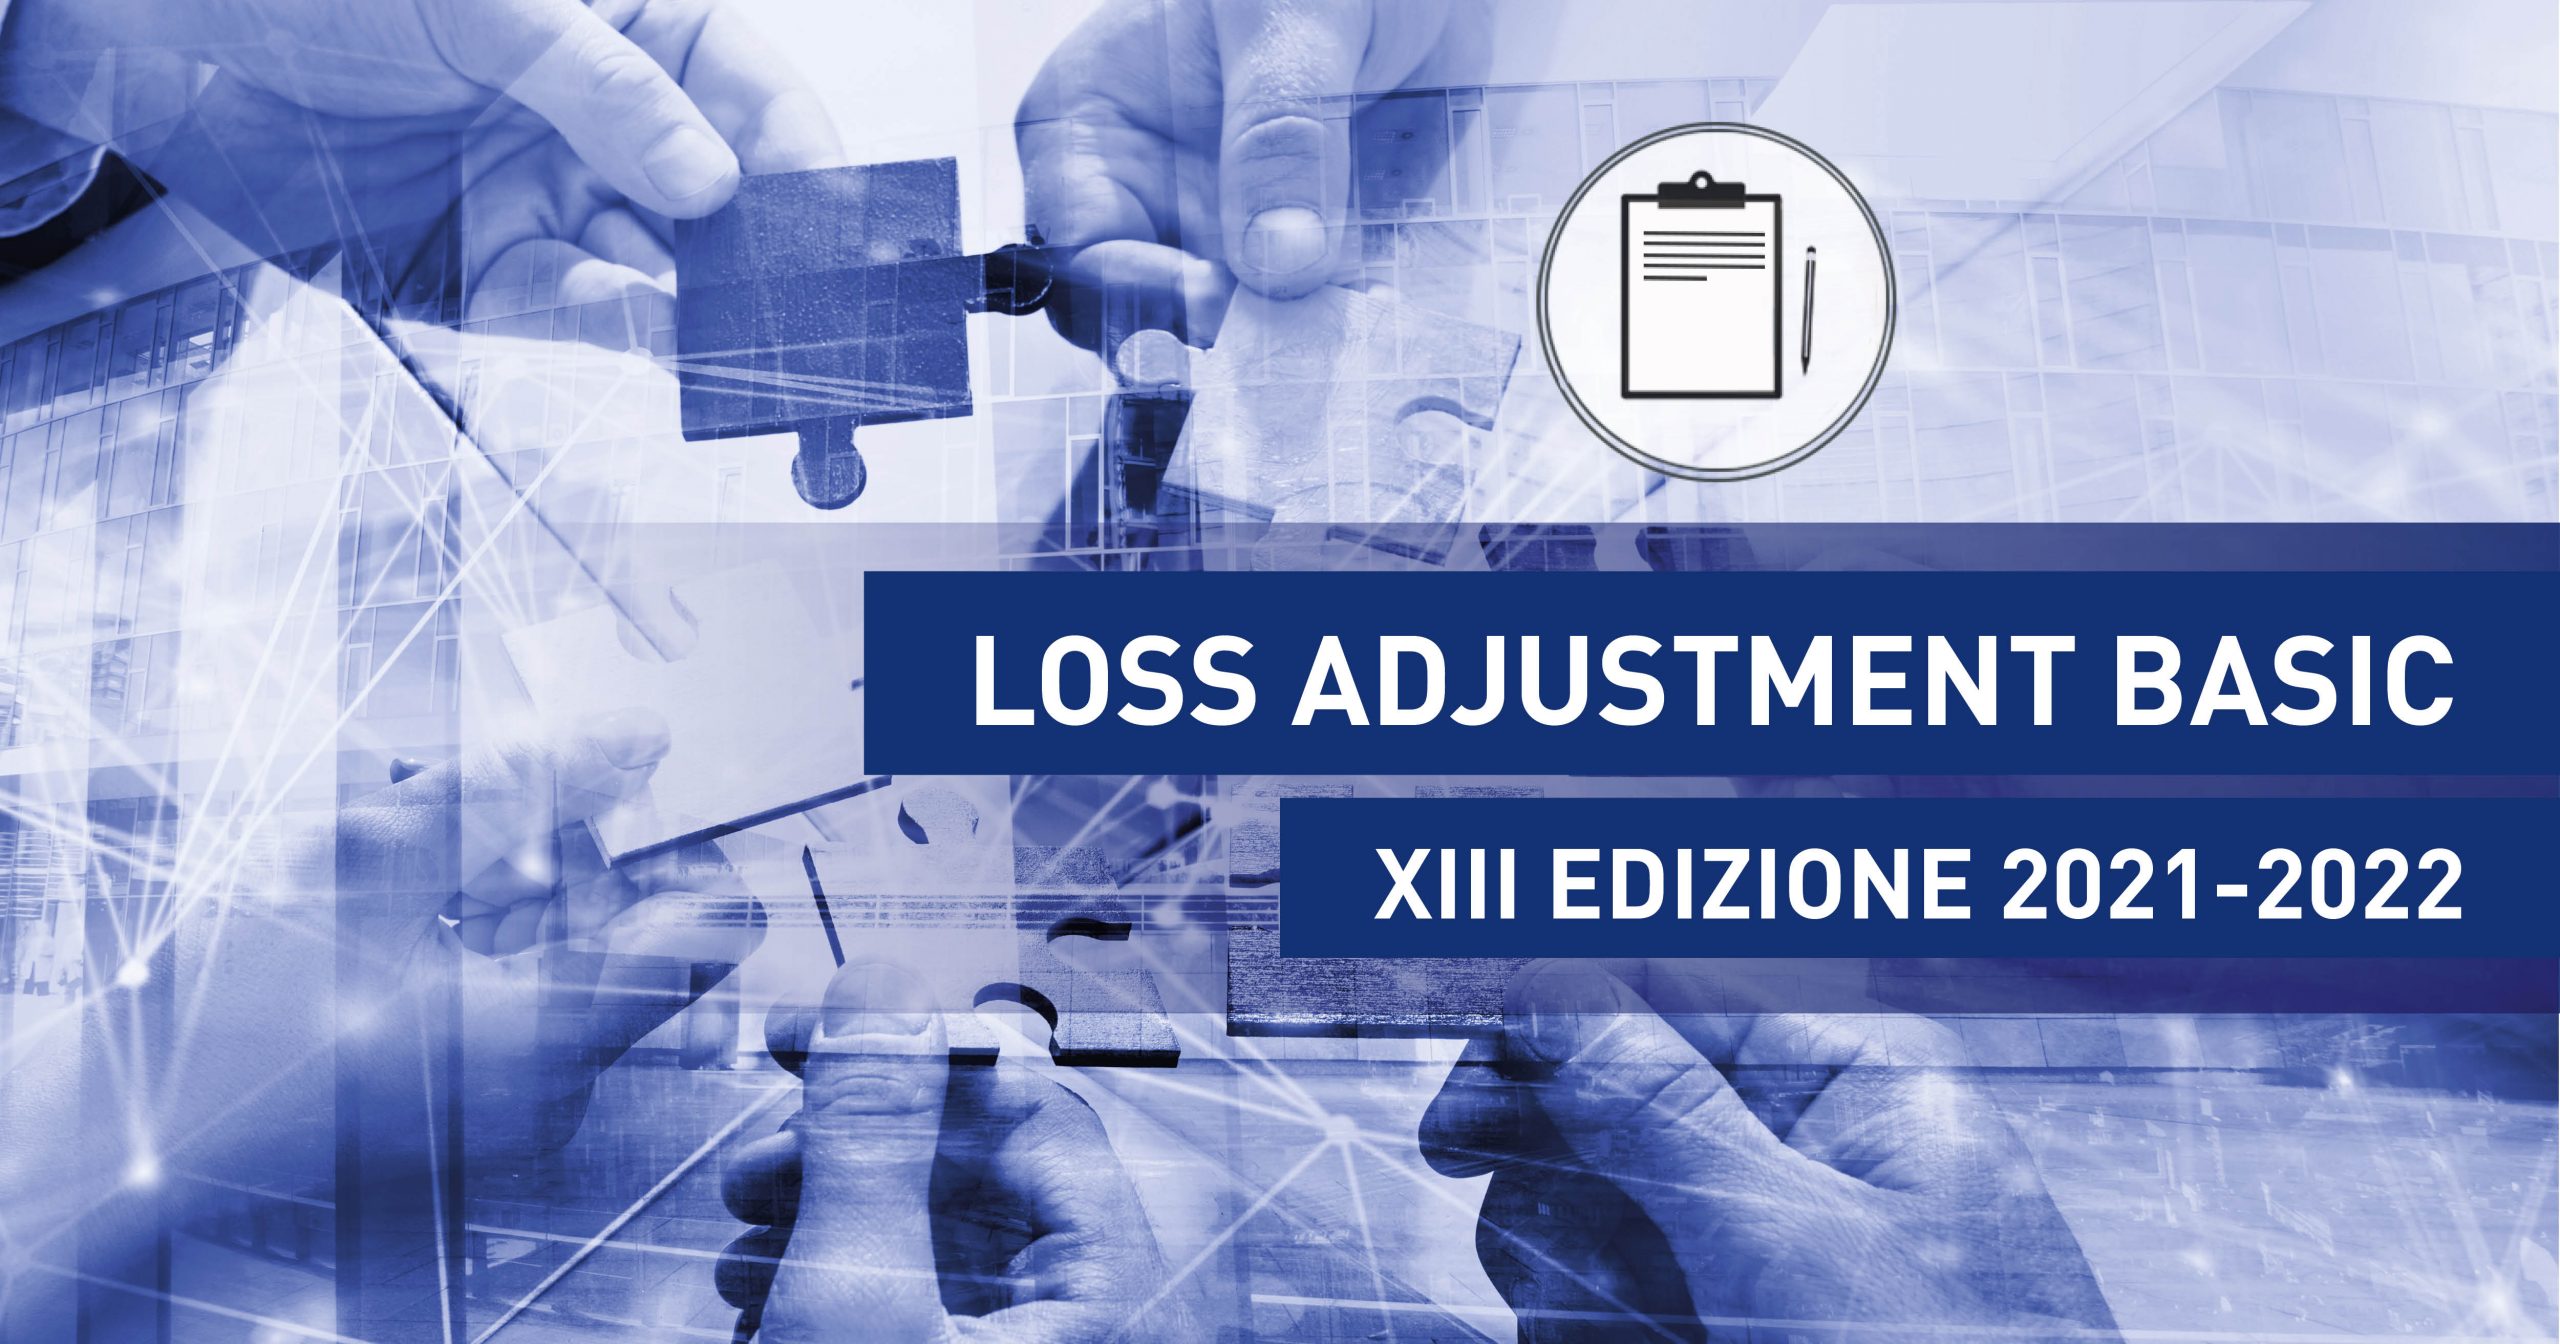 Loss adjustment basic